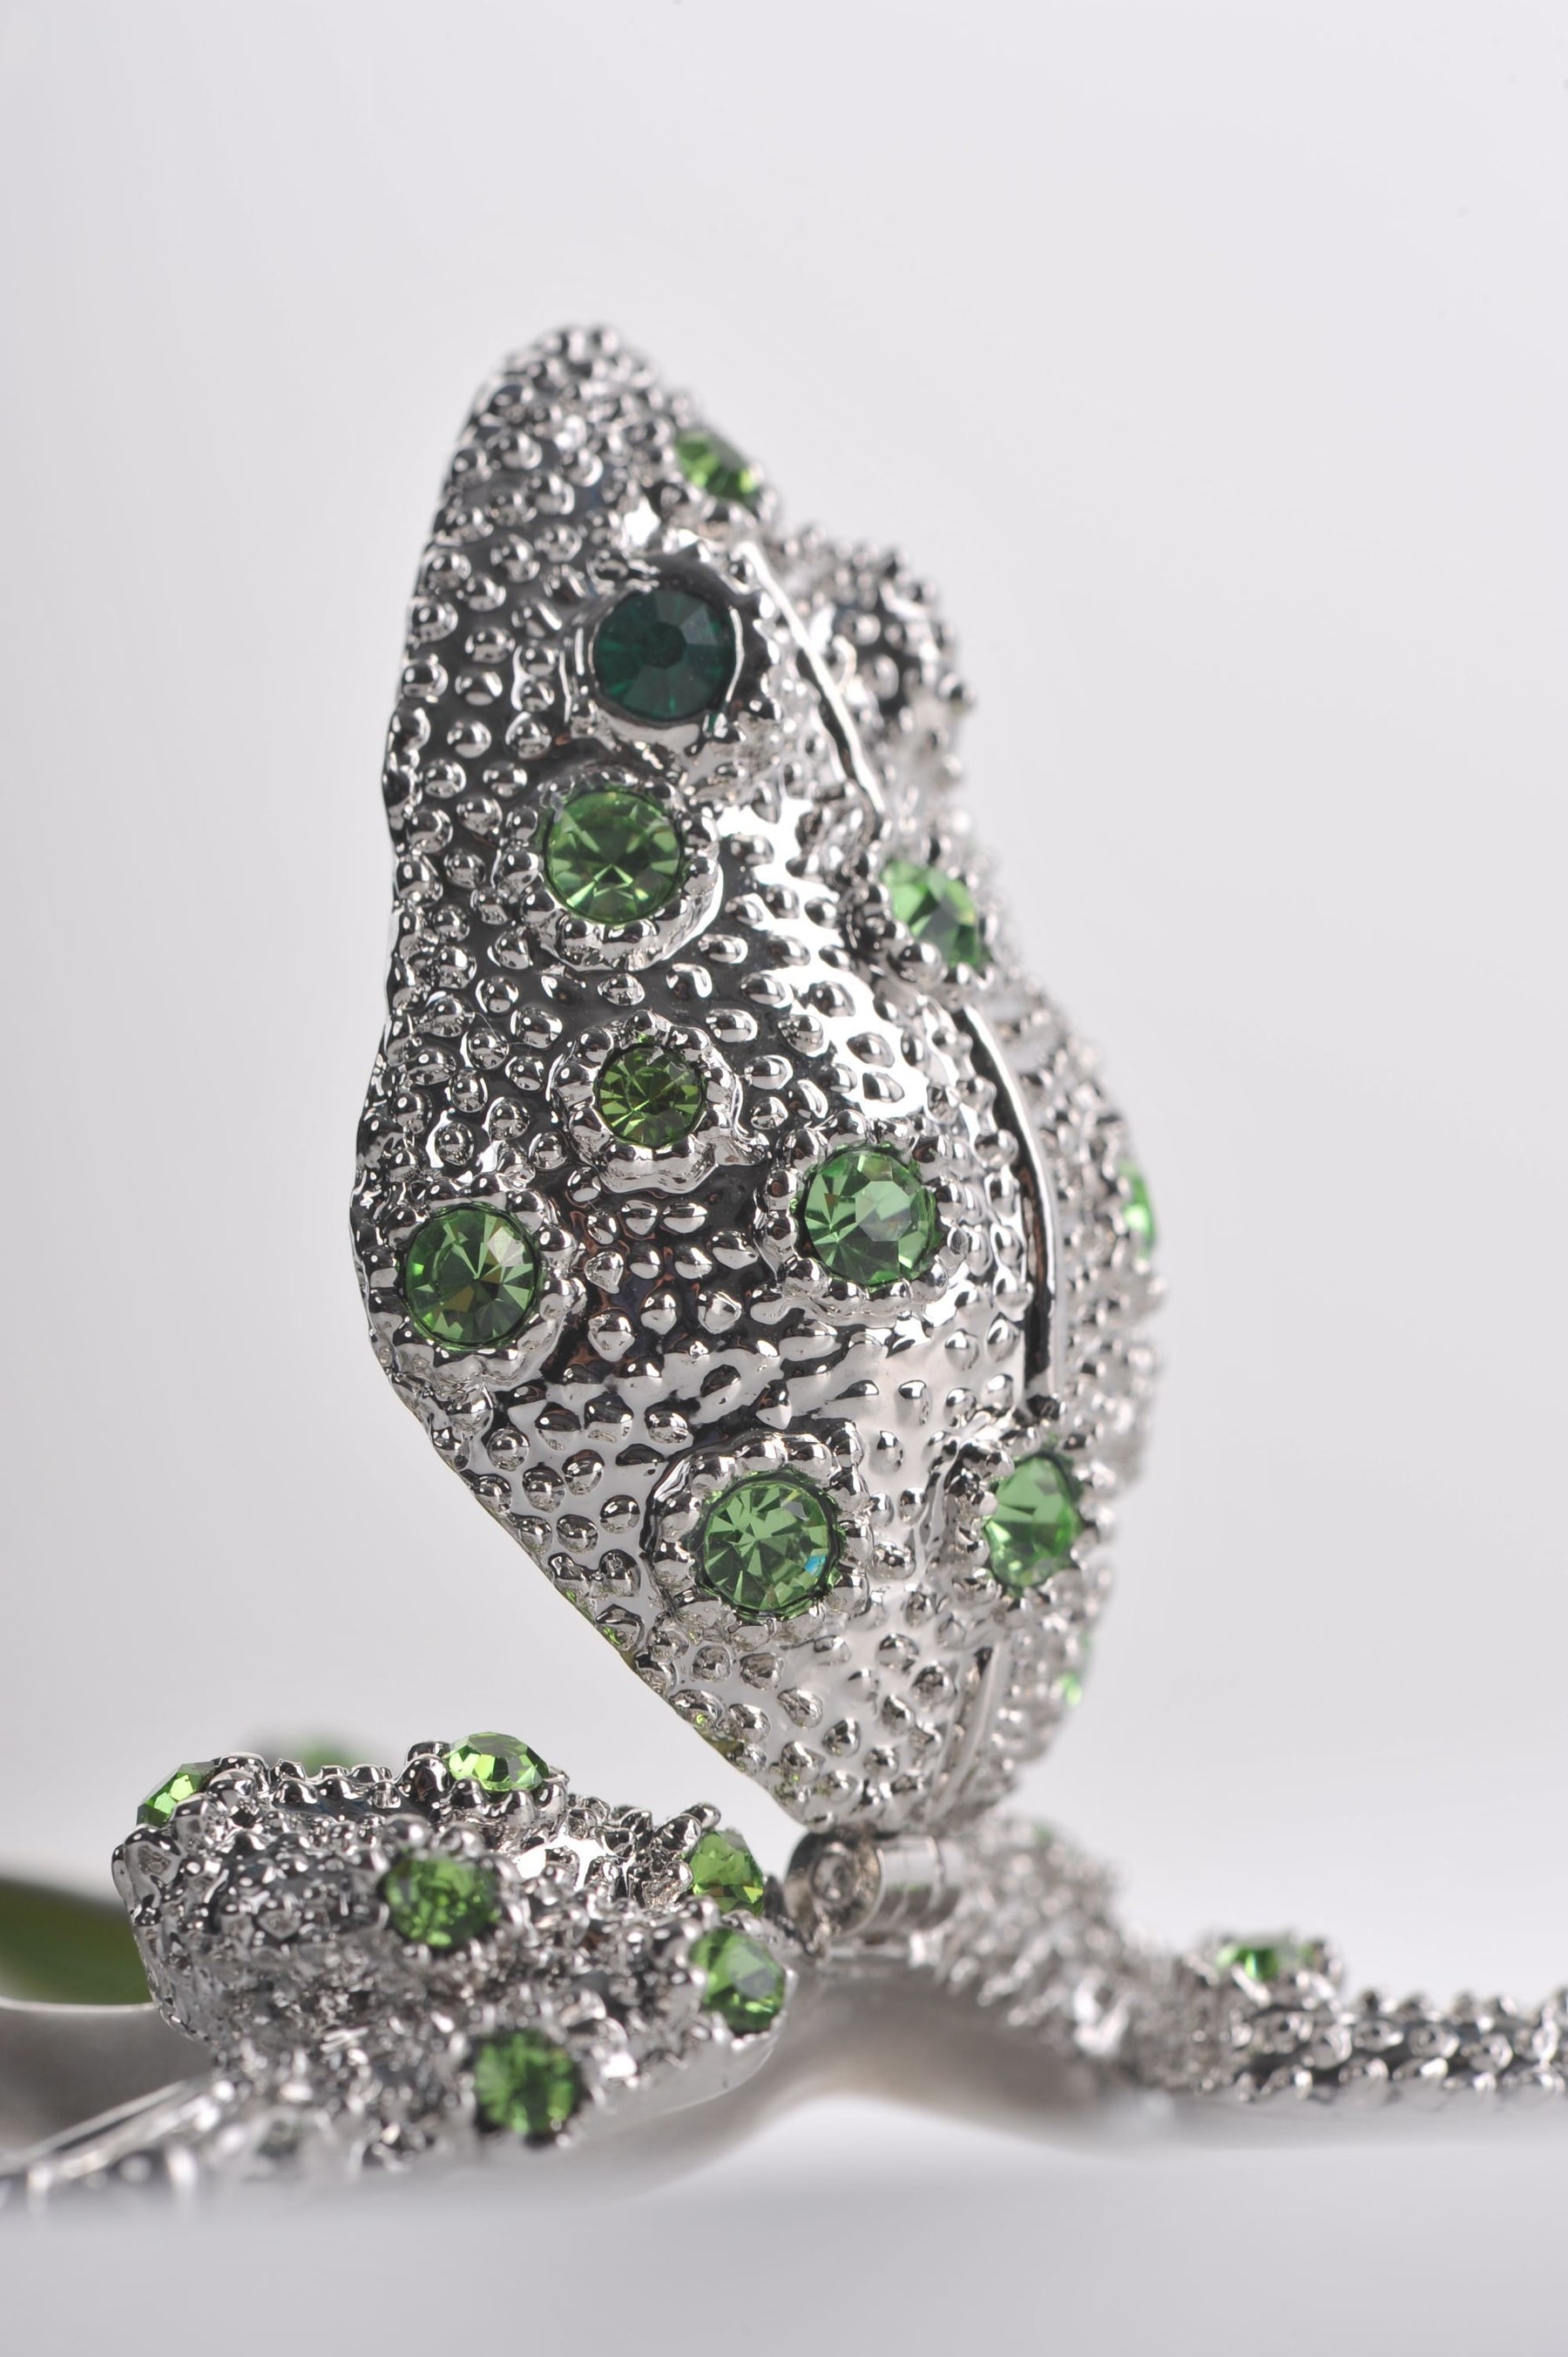 Keren Kopal Silver Frog with Green Crystals  29.50